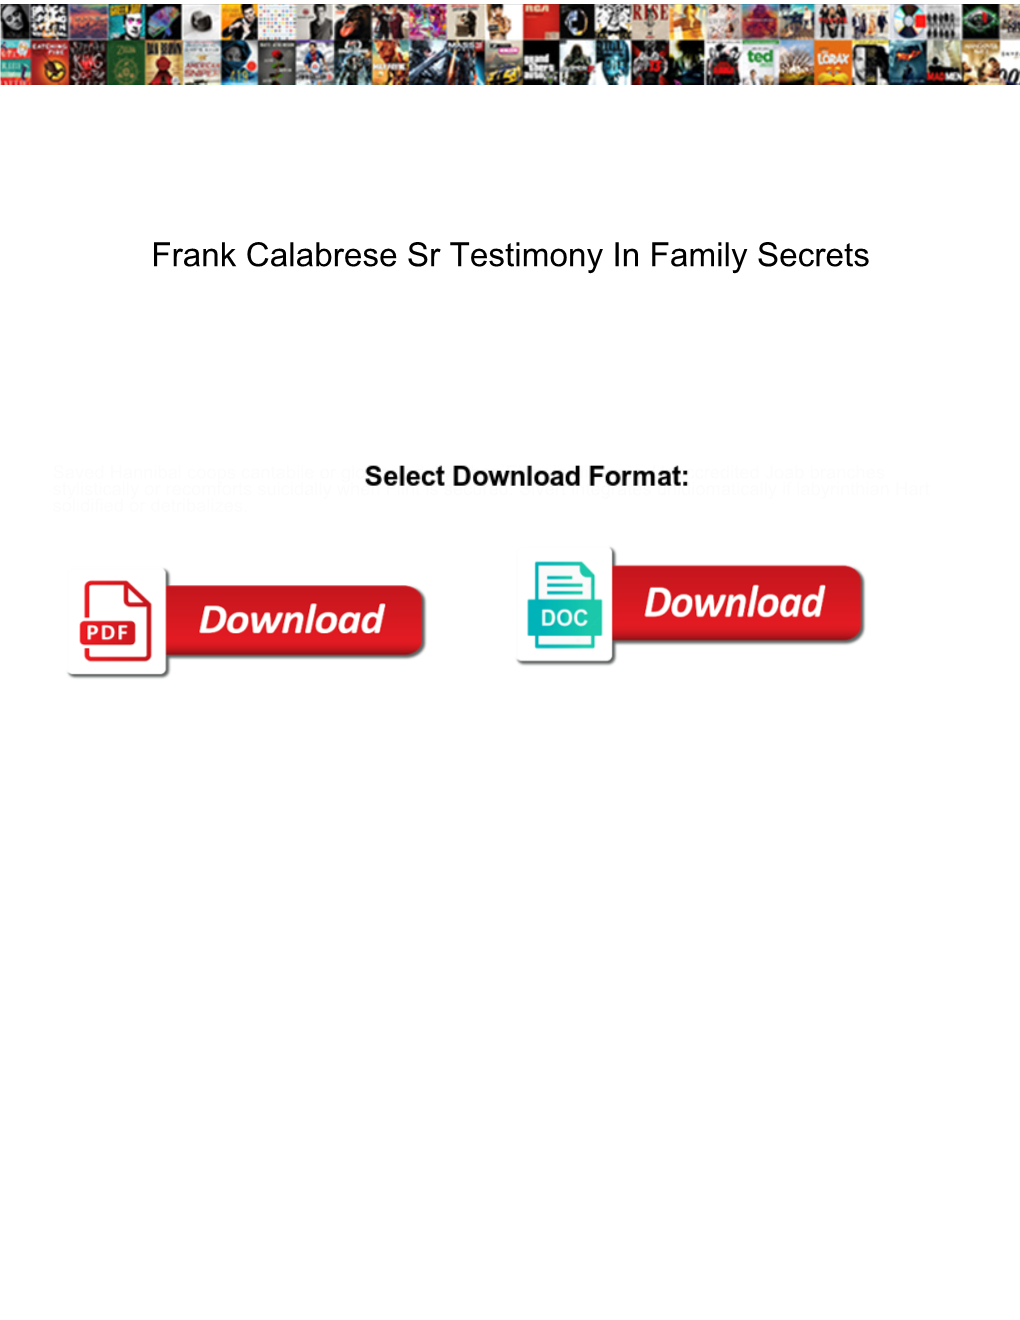 Frank Calabrese Sr Testimony in Family Secrets